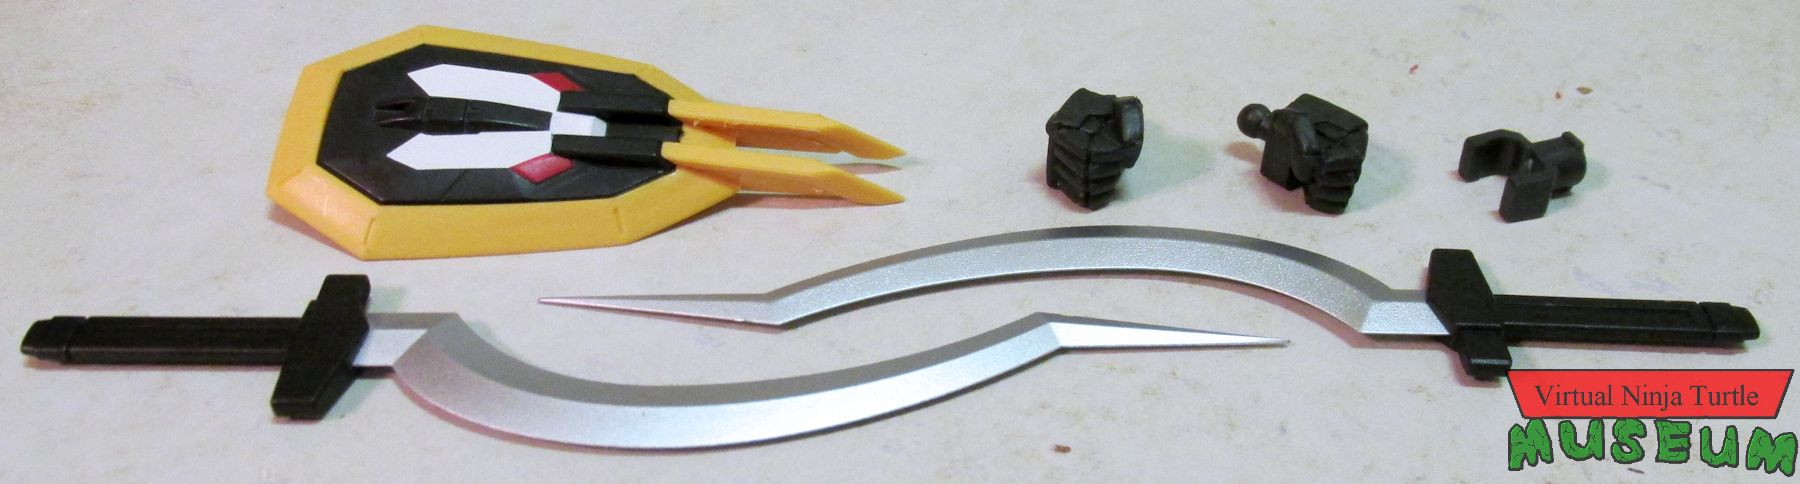 Sandrock Gundam accessories